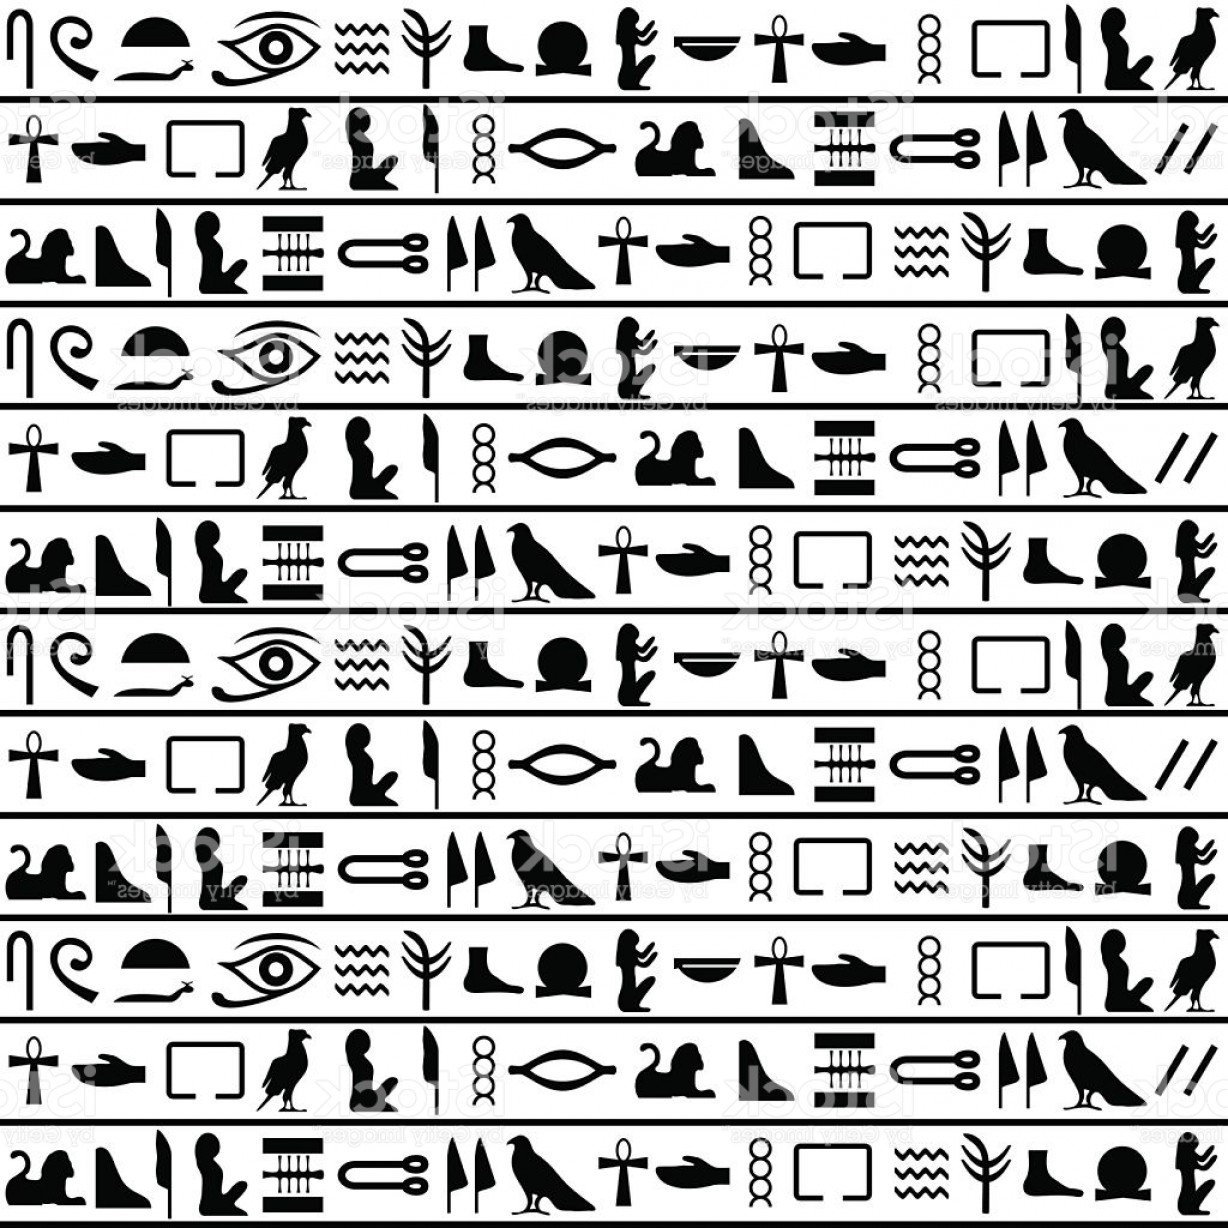 Hieroglyphs Vector At Getdrawings Free Download 4453